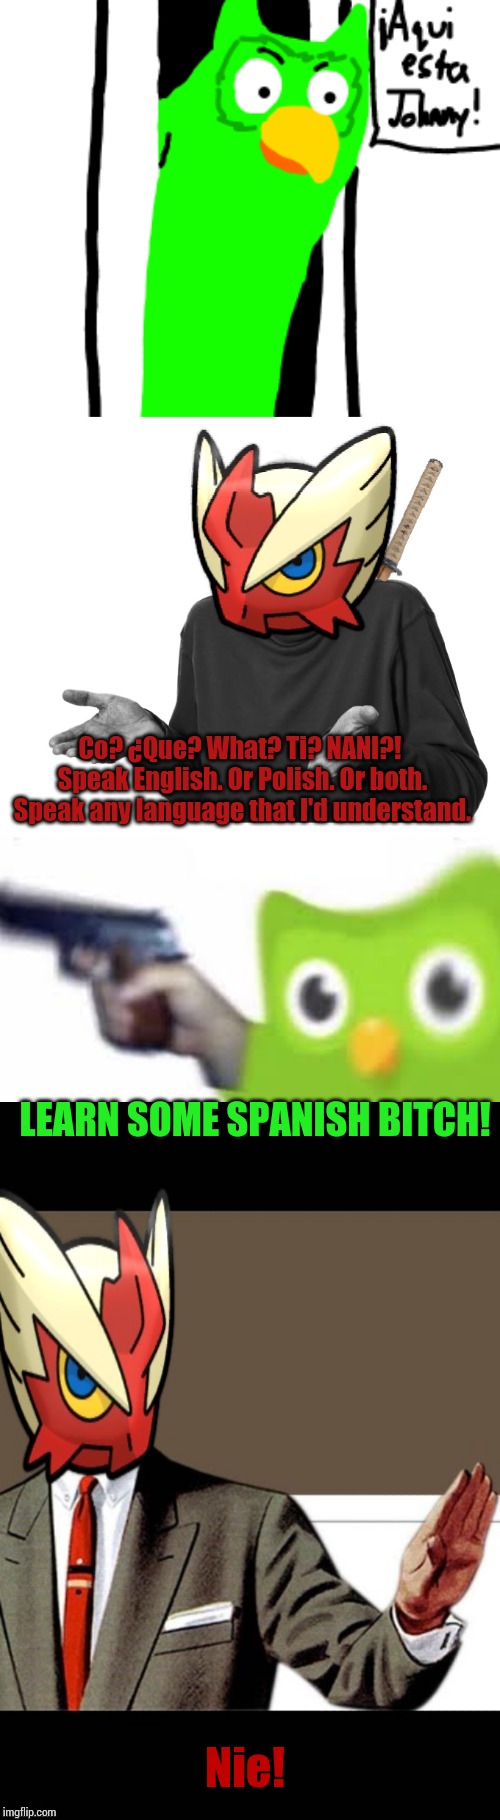 they don't understand the homework in spanish duolingo